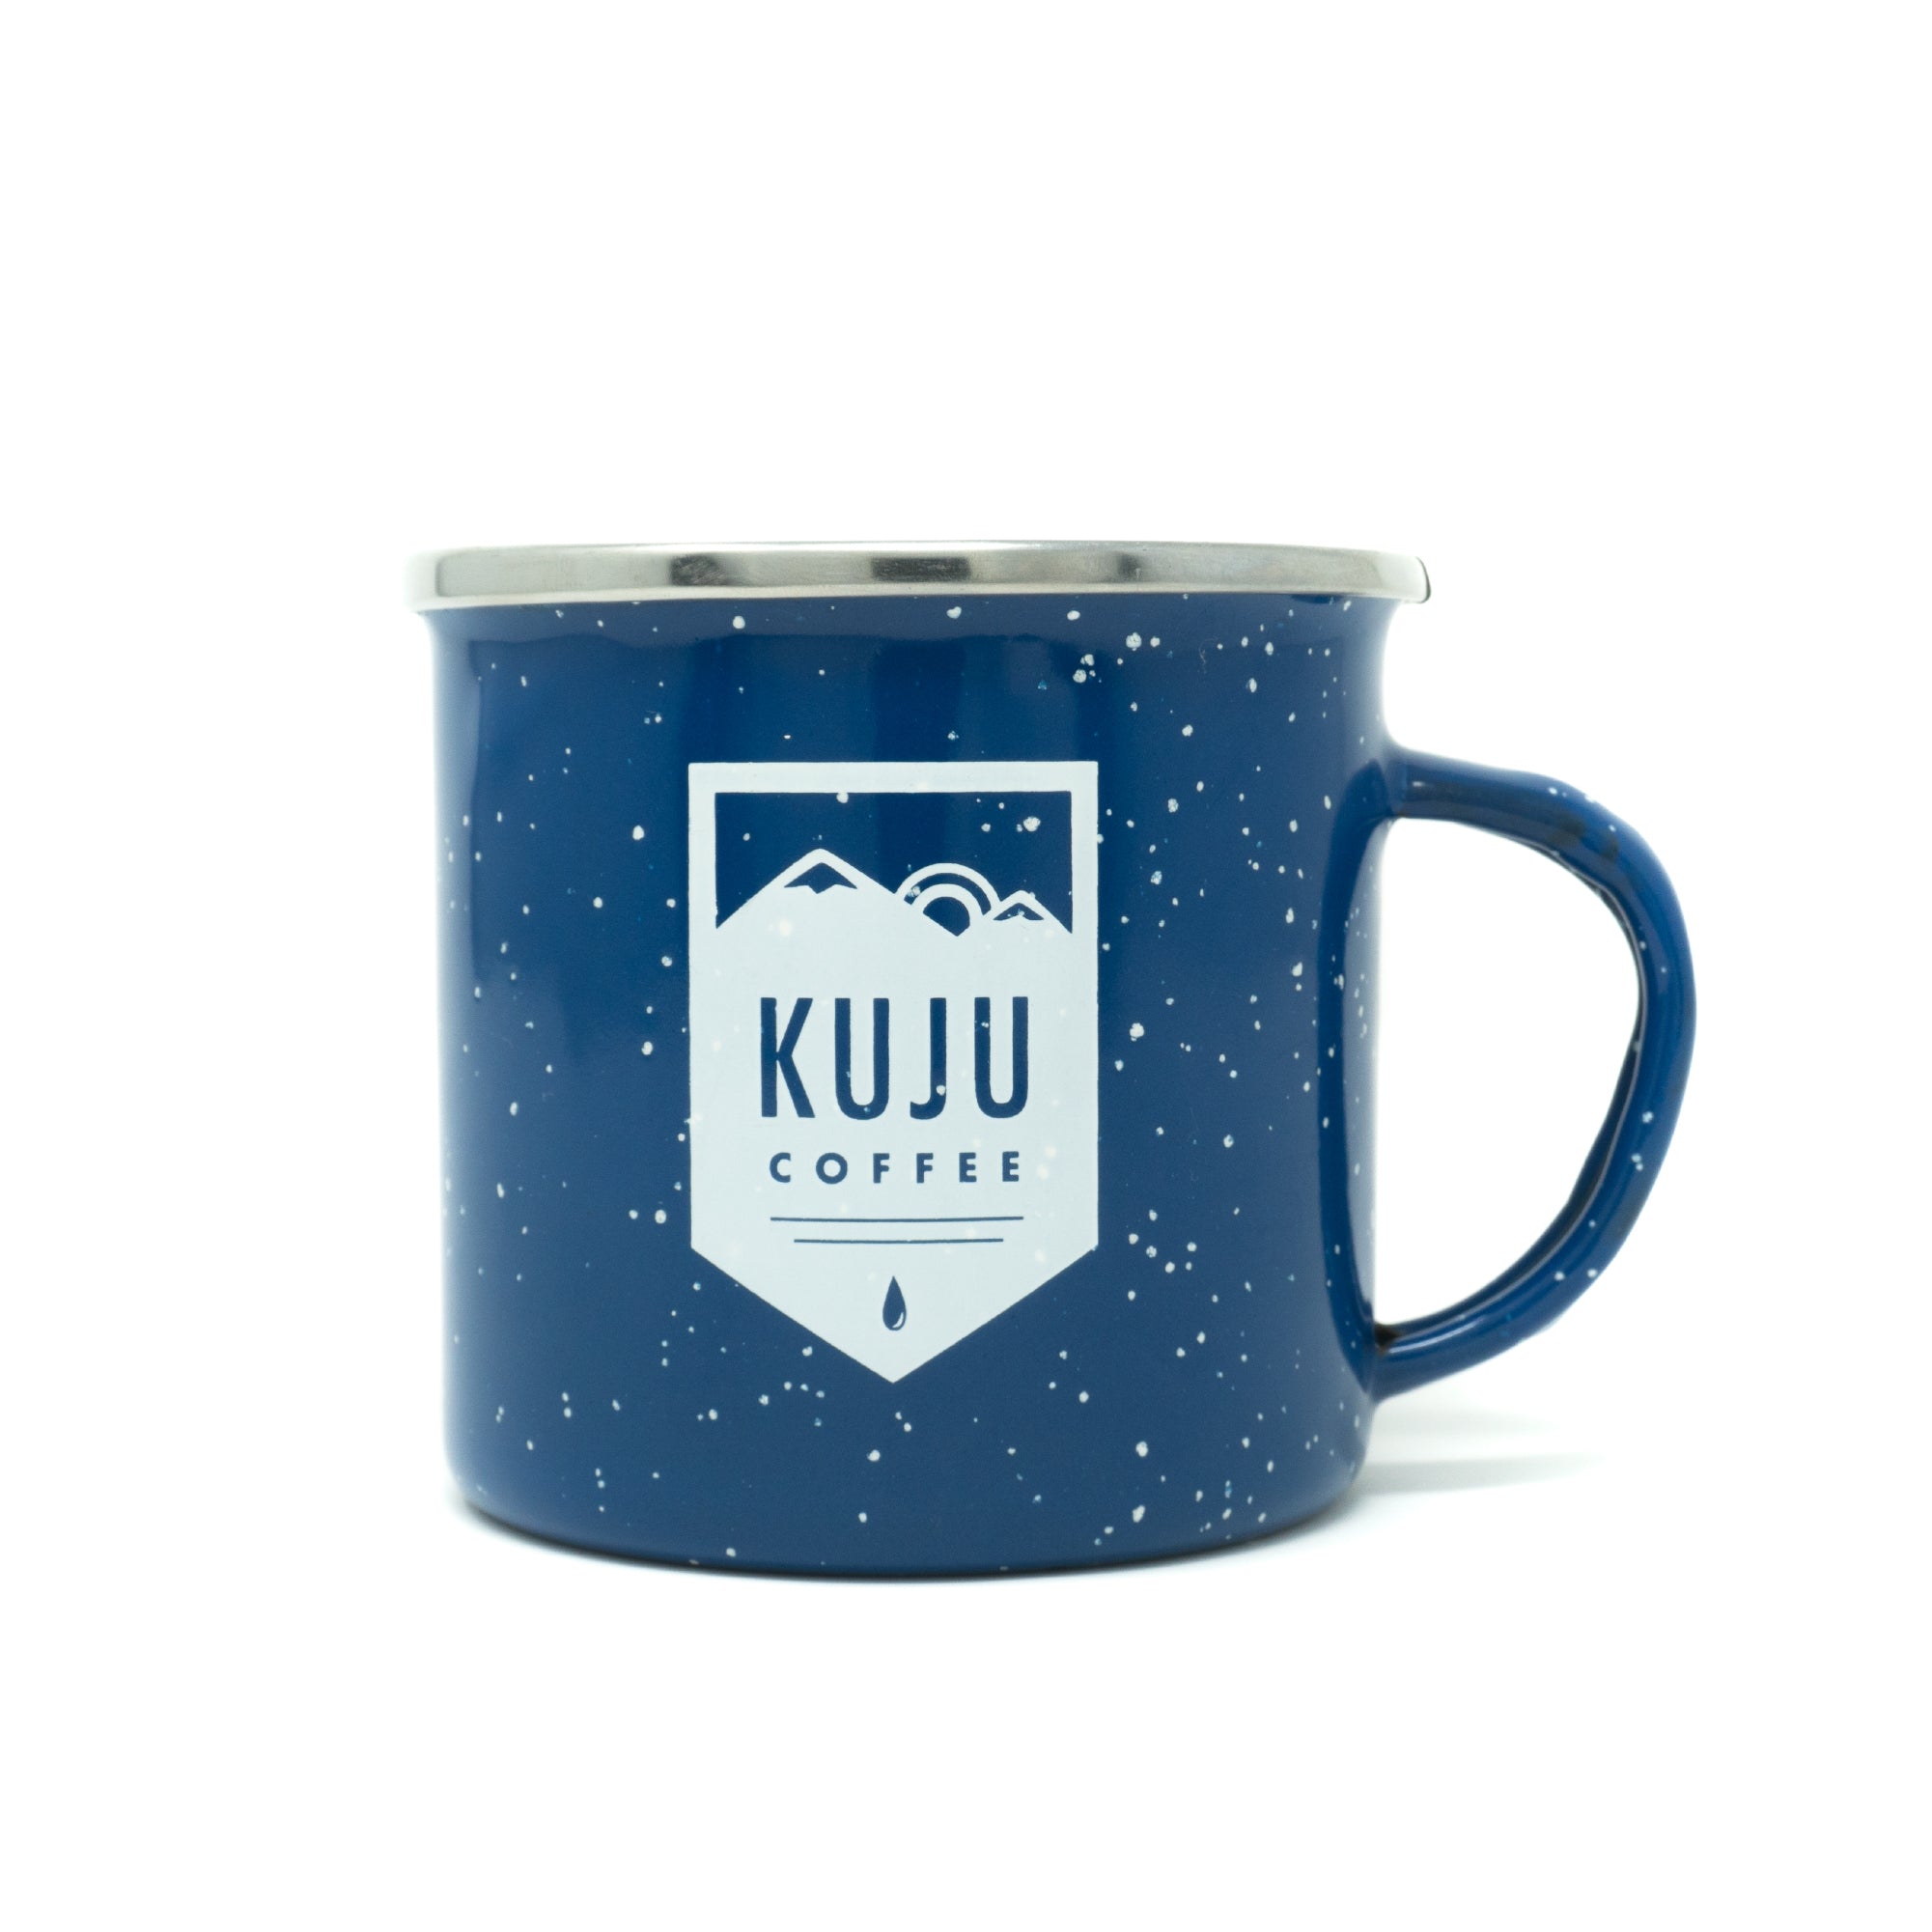 Kuju Enamel Mug - Kuju Coffee